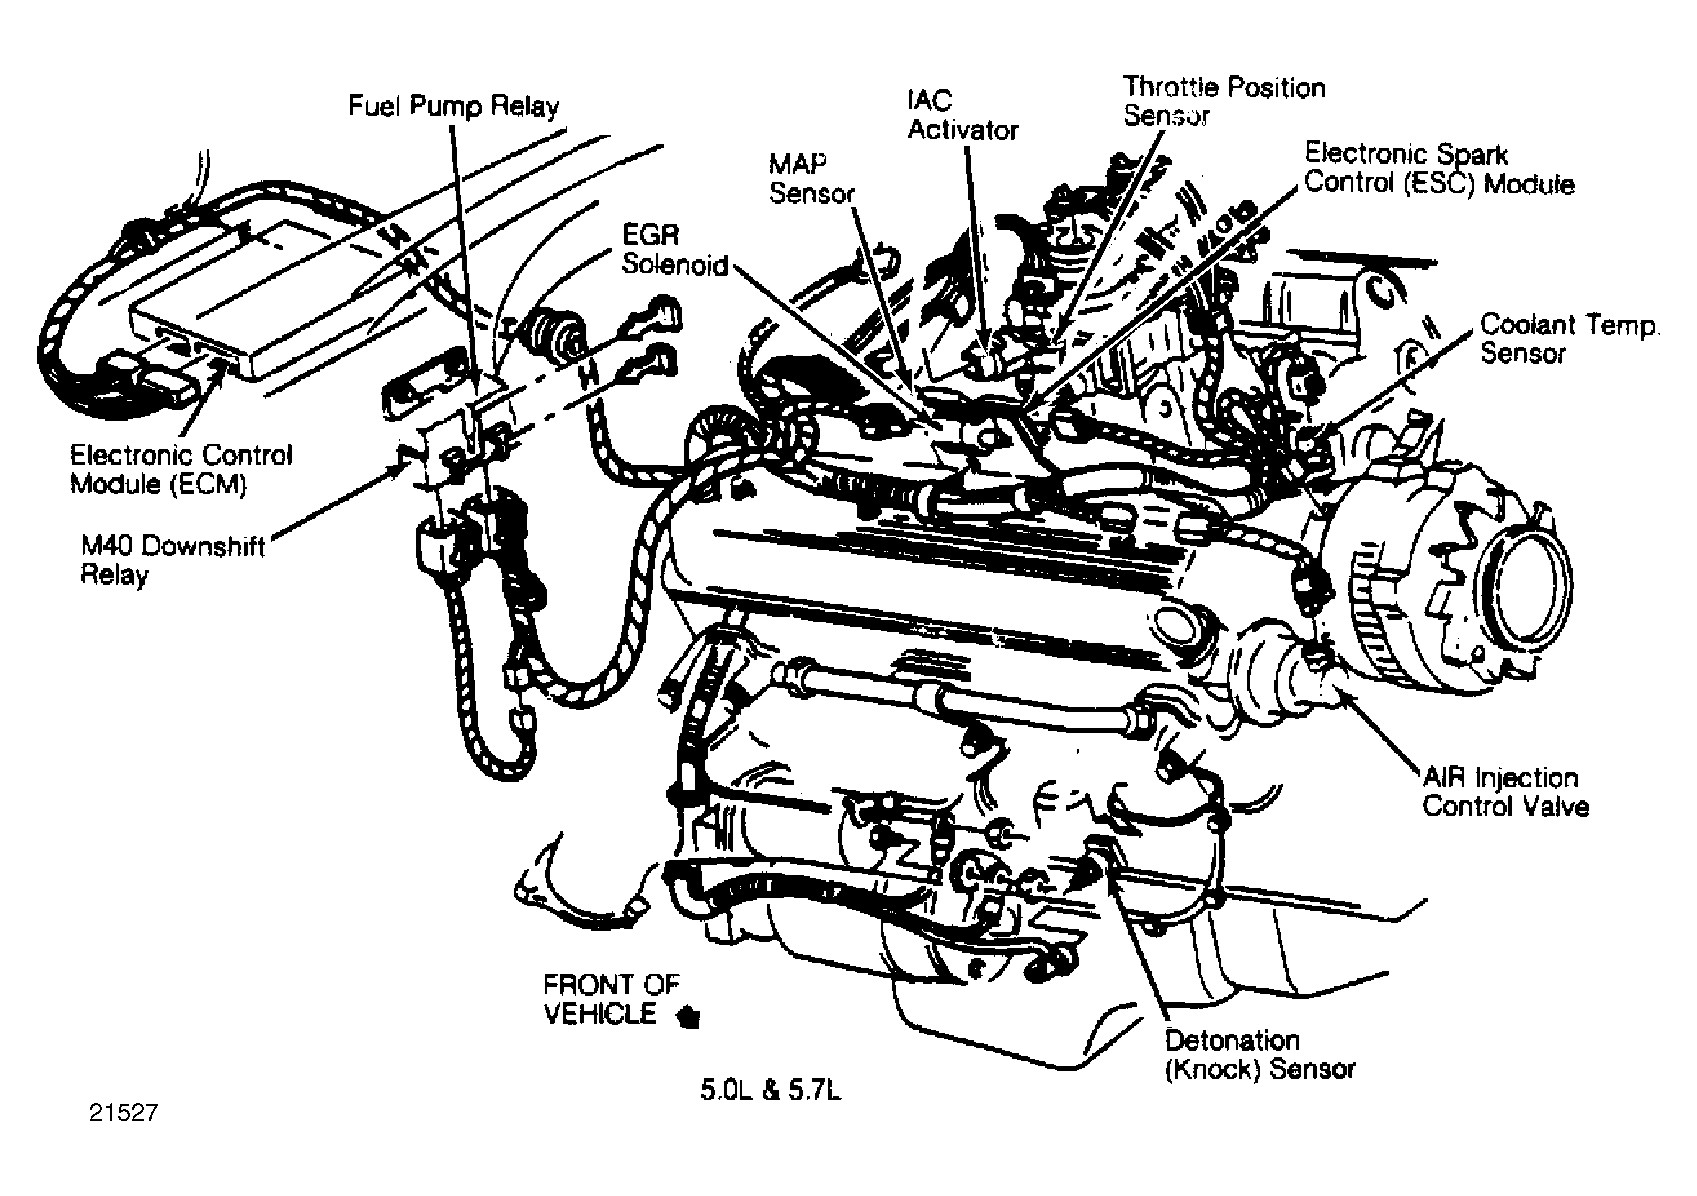 2000 Chevy Malibu Engine Diagram 1997 Chevy Malibu 3 1 Engine Likewise 2000 Chevy Malibu Engine Of 2000 Chevy Malibu Engine Diagram